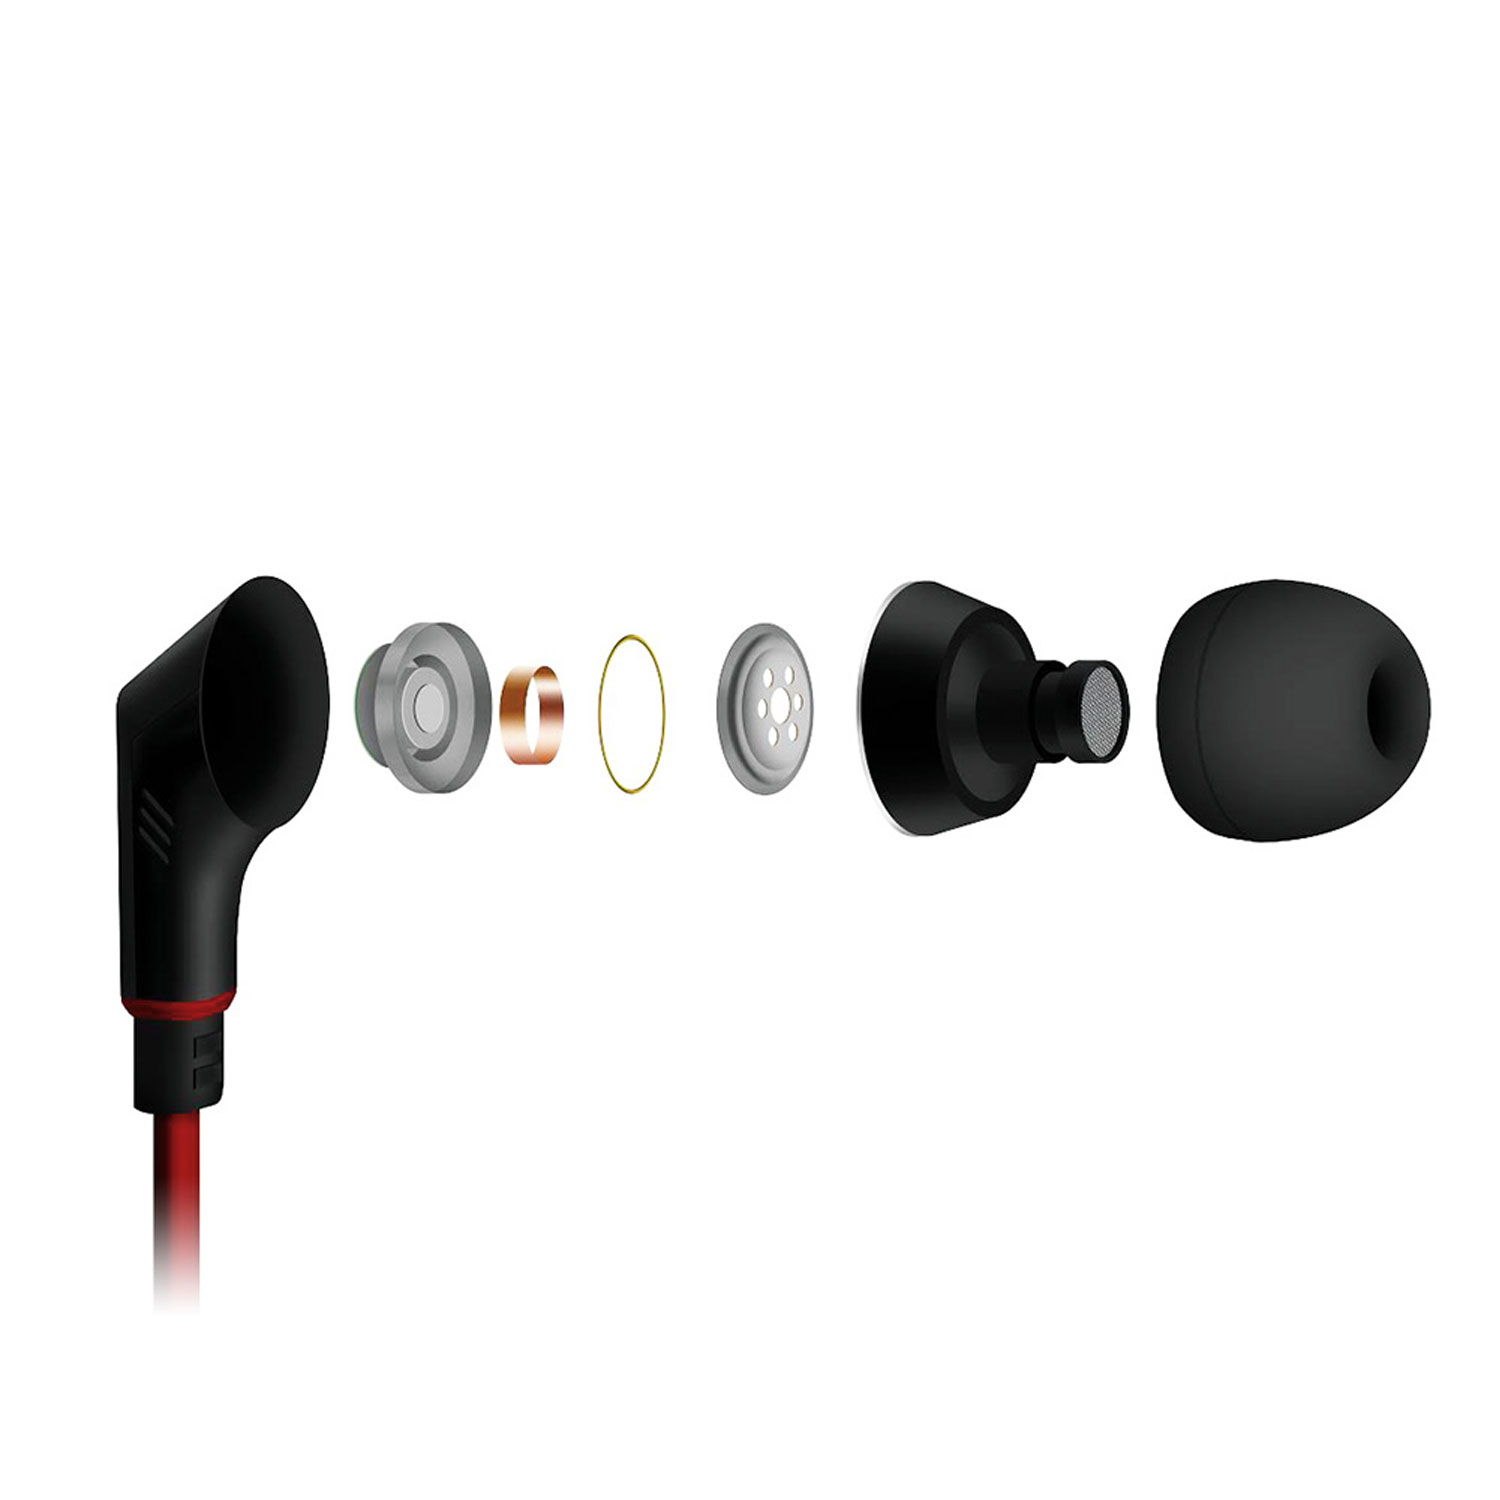 NoiseHush NX80 Stereo 3.5mm Earbuds